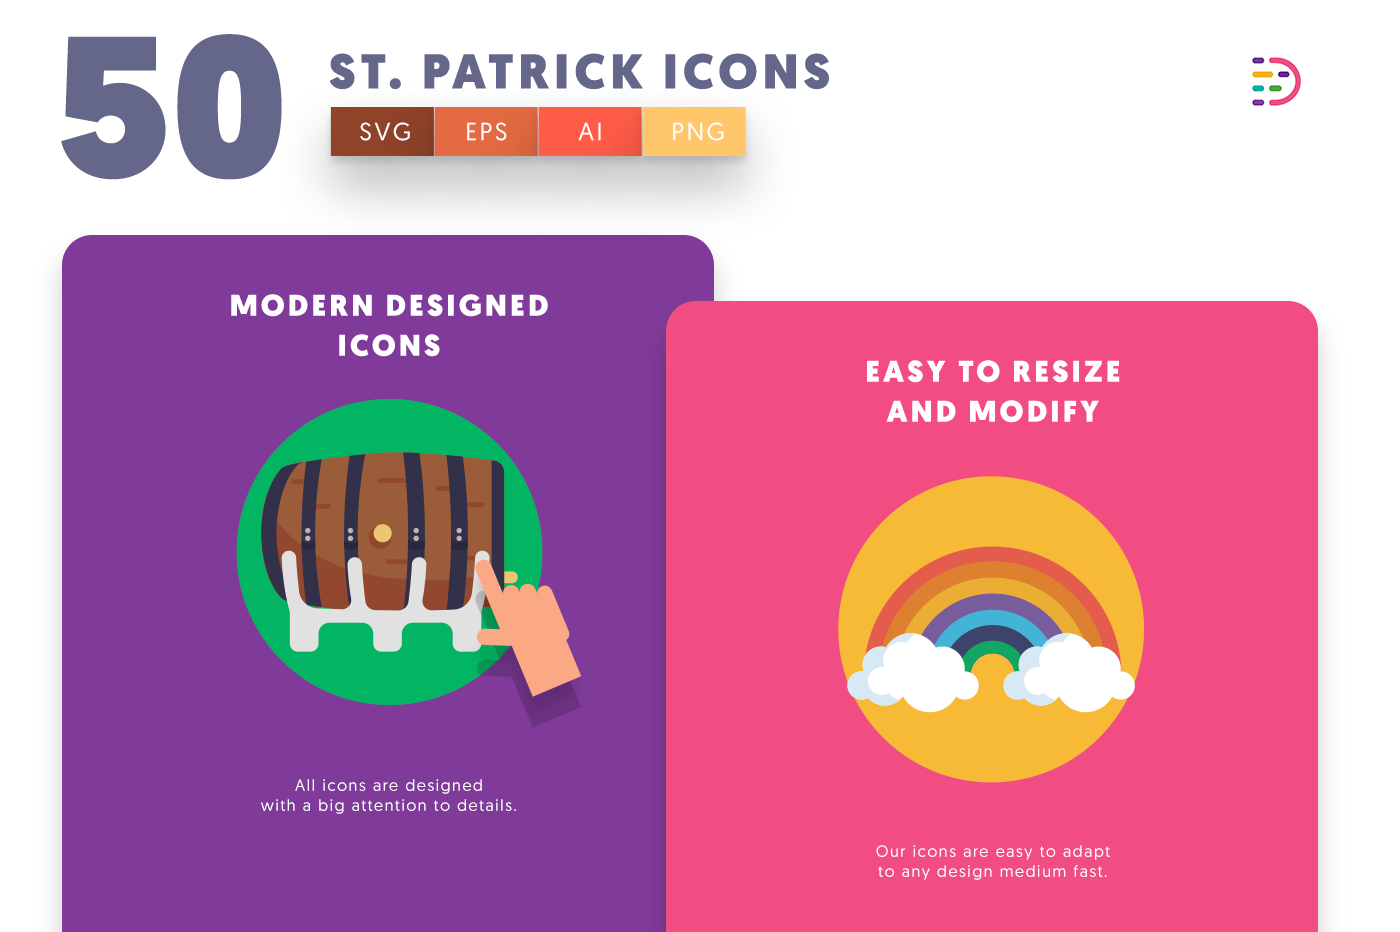 50-St Patrick-Icons